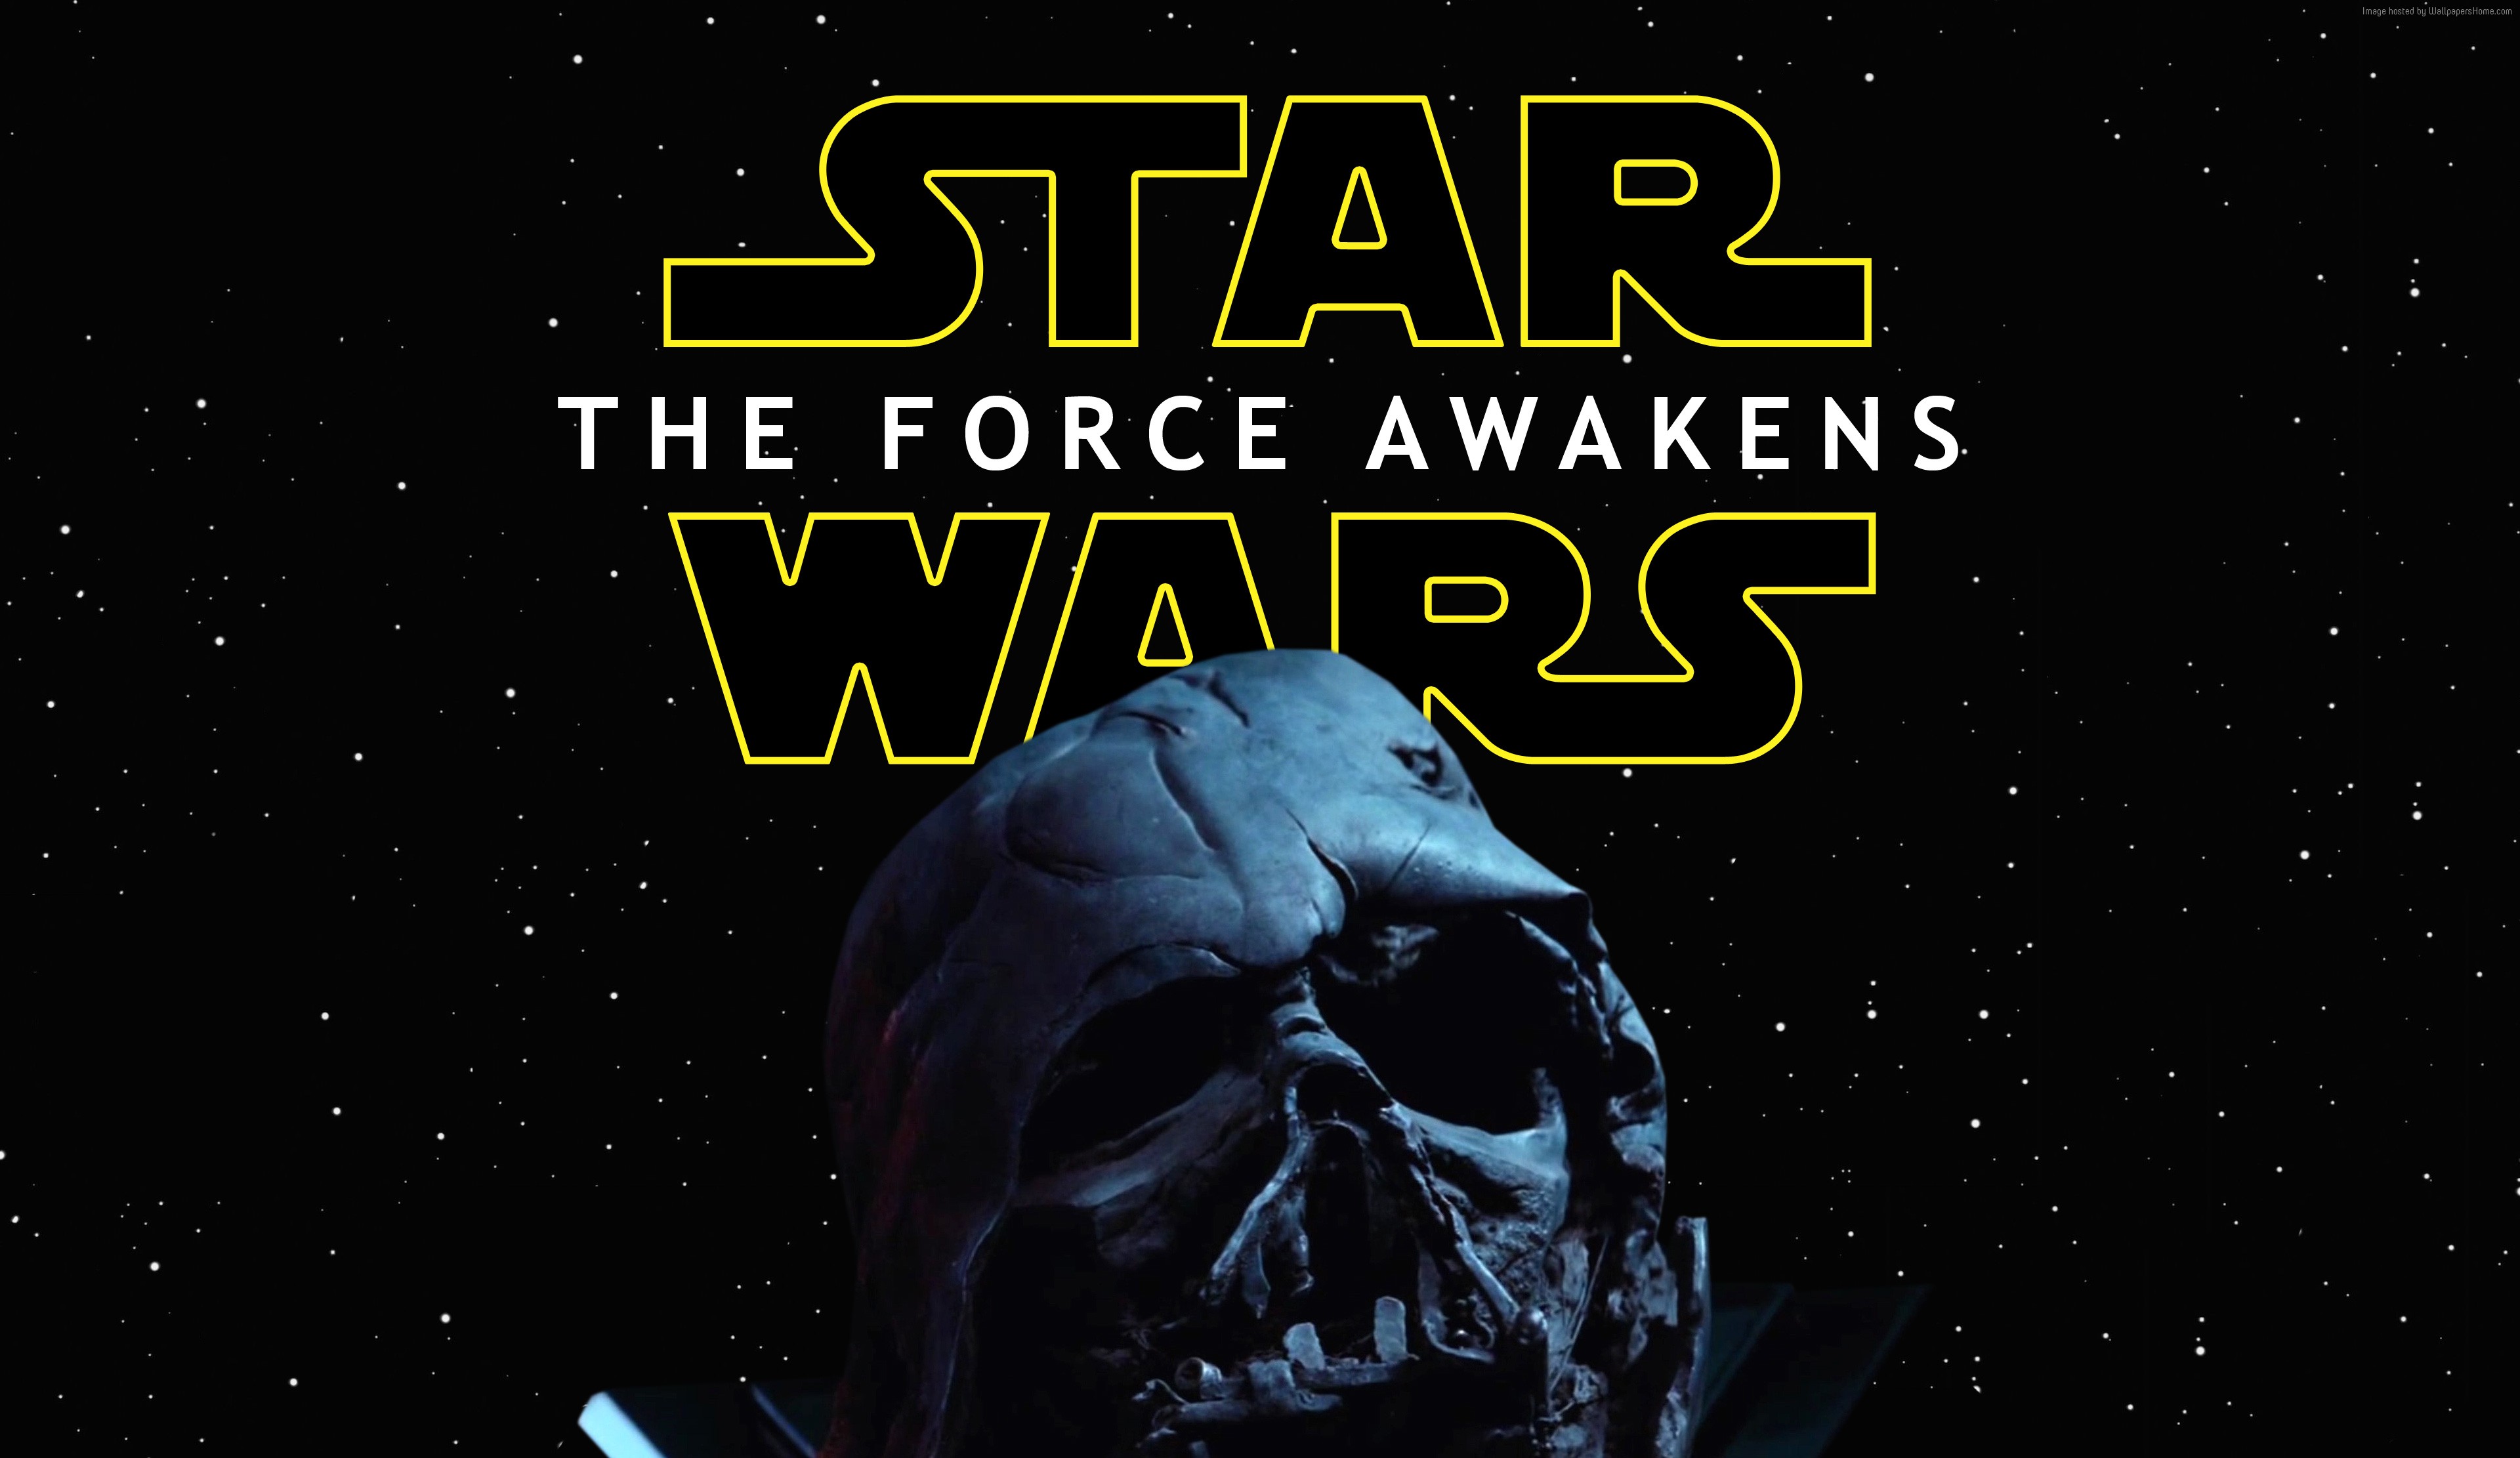 High Resolution Wallpaper | Star Wars Episode VII: The Force Awakens 3840x2222 px